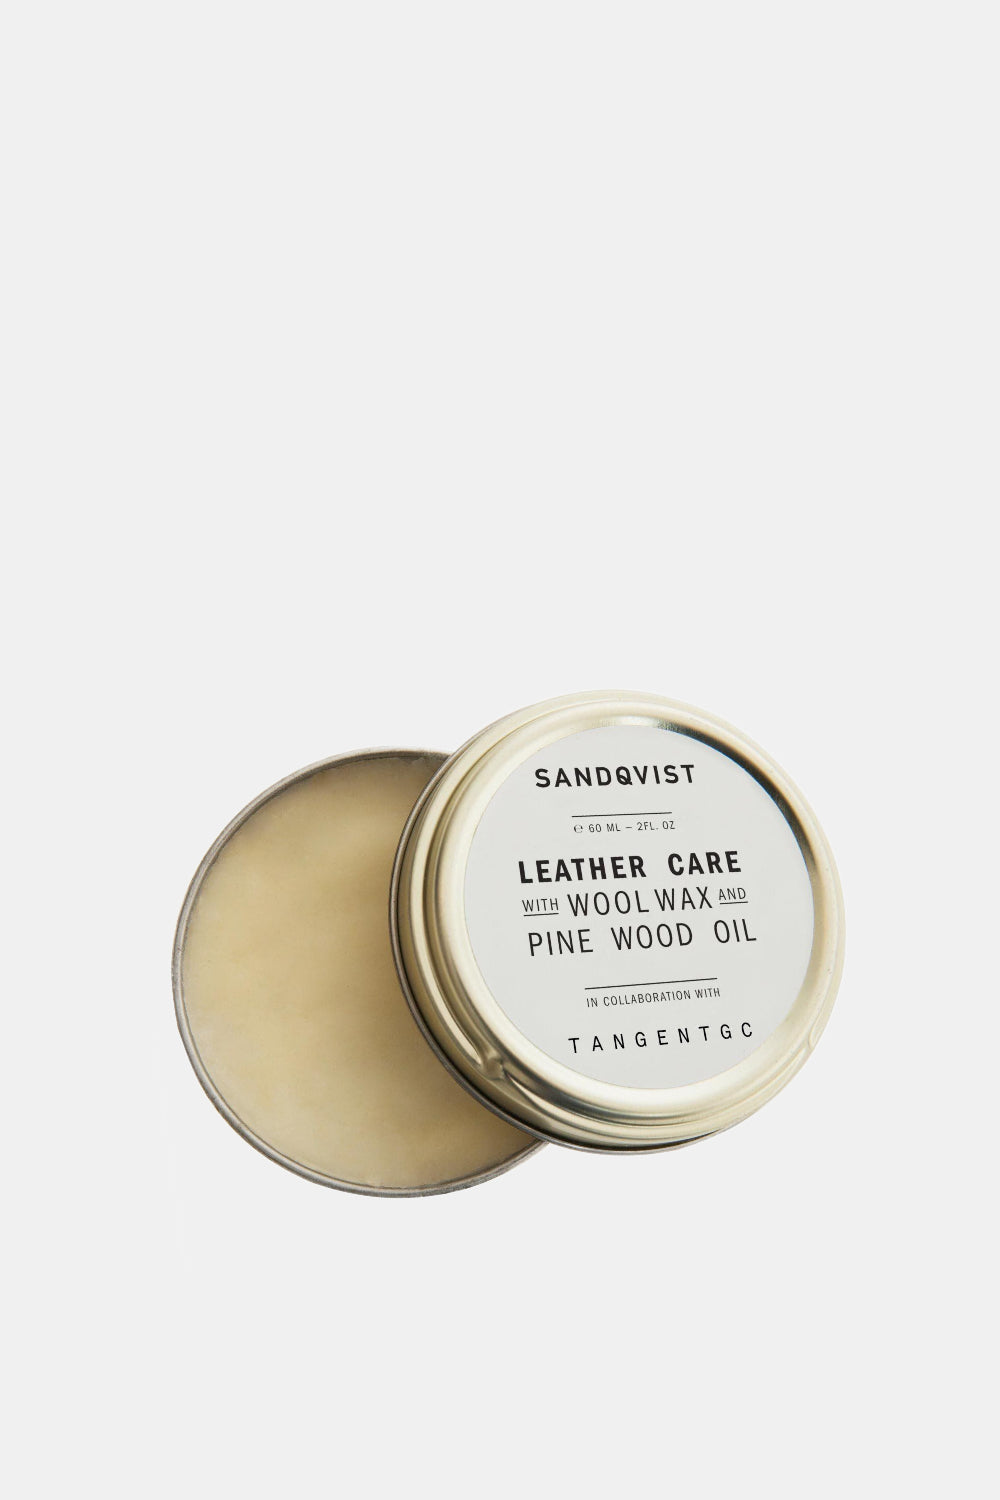 Sandqvist Leather Care Kit